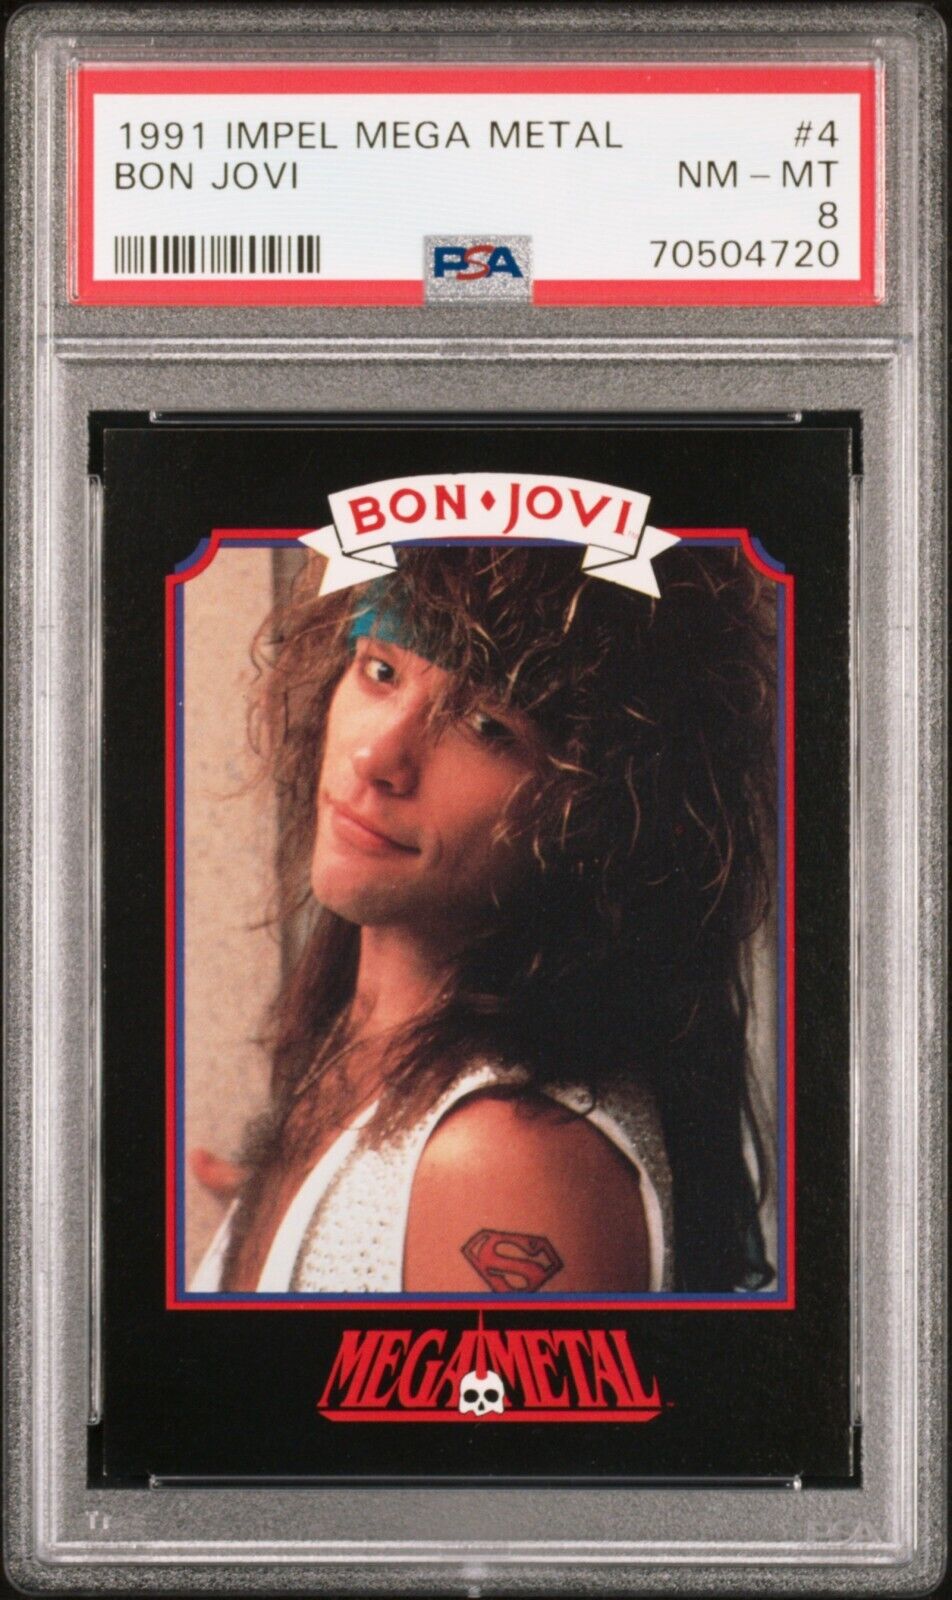 1991 Impel Mega Metal Bon Jovi #4 PSA 8